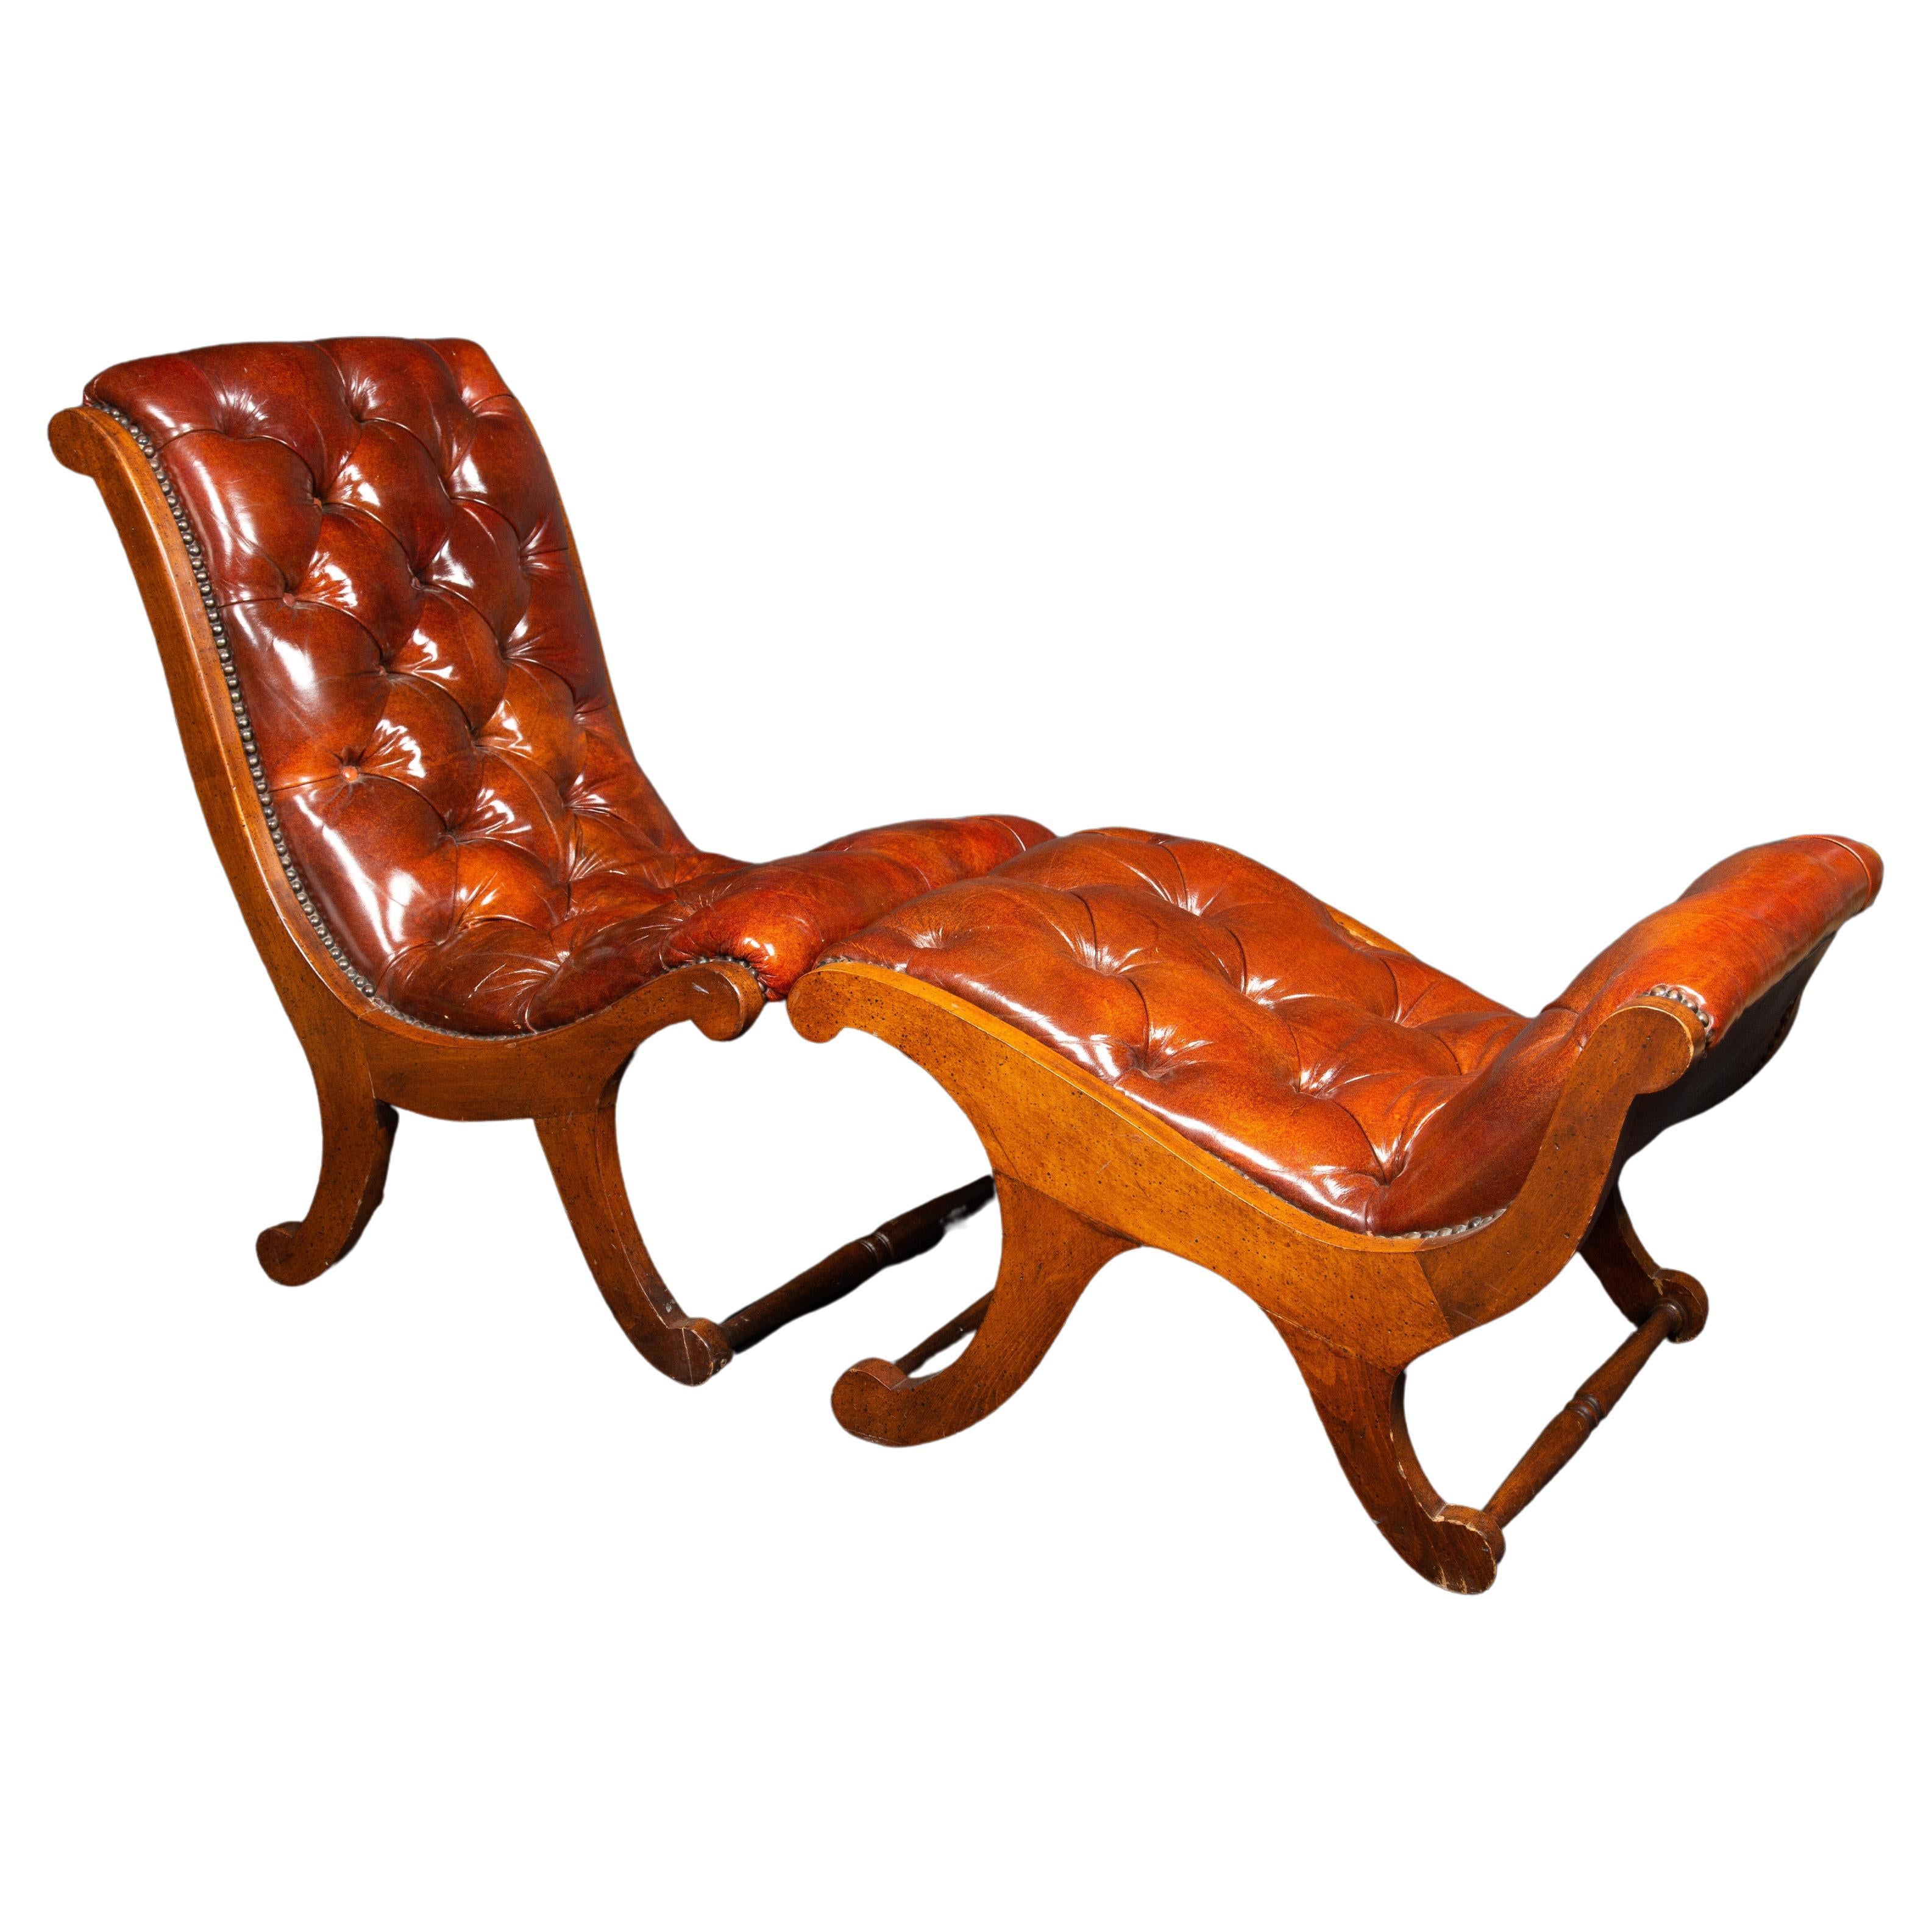 Georgian Style Tufted Leather Chair & Ottoman